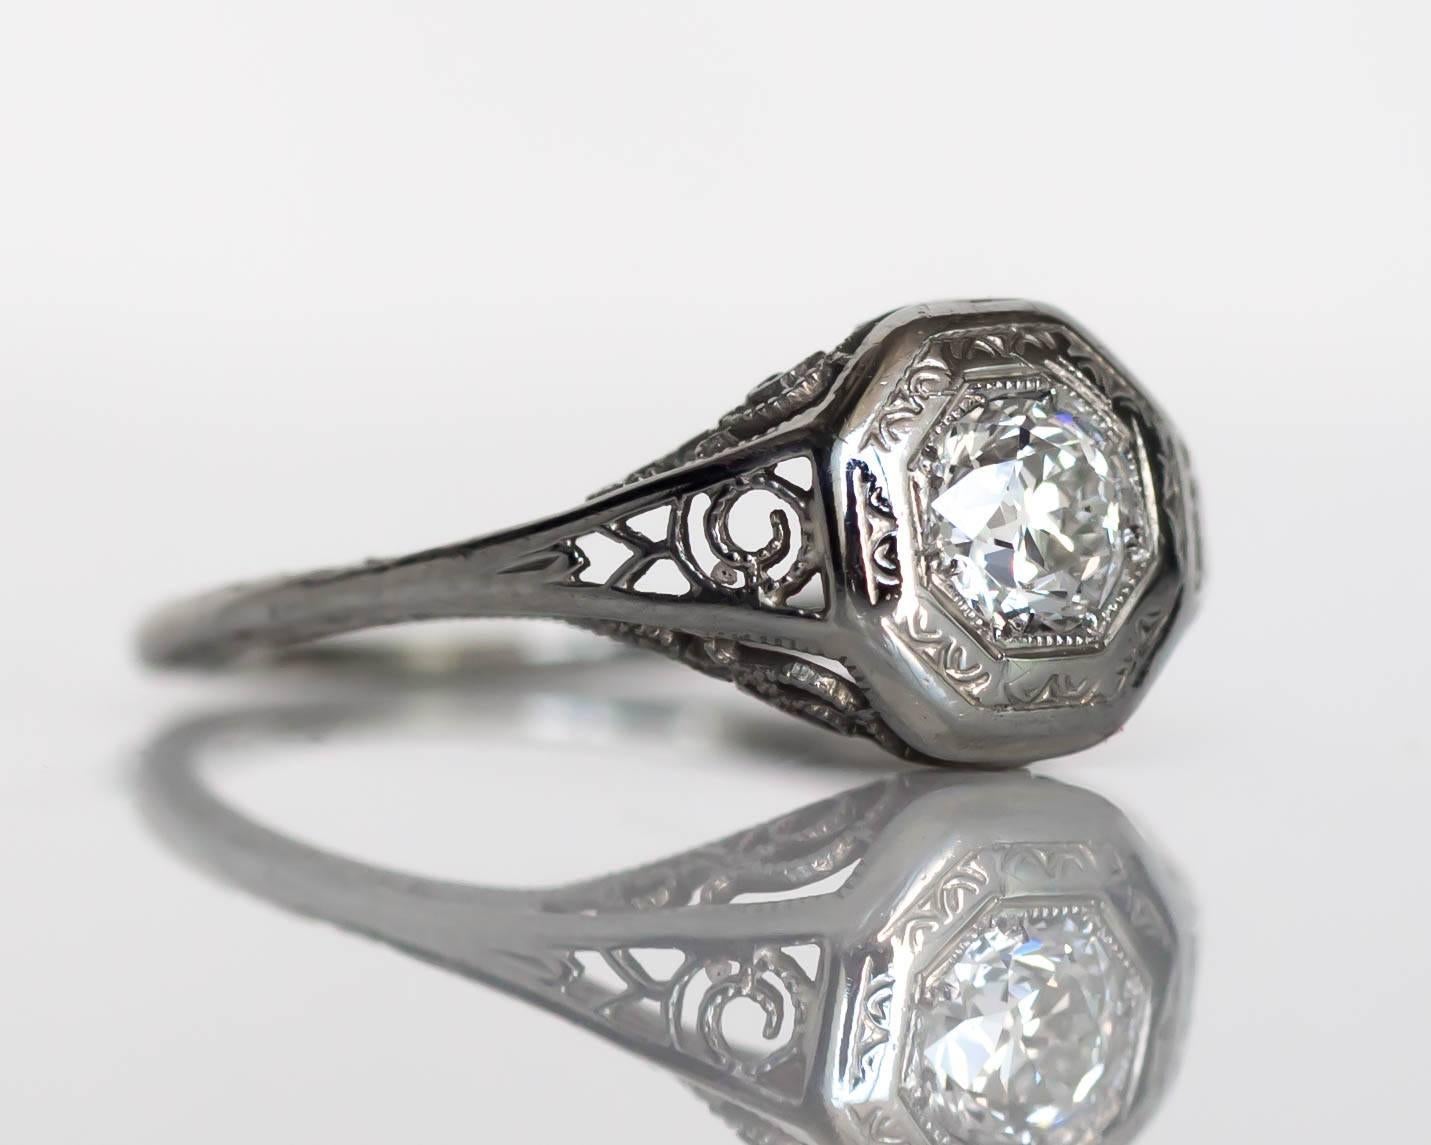 .35 carat diamond ring